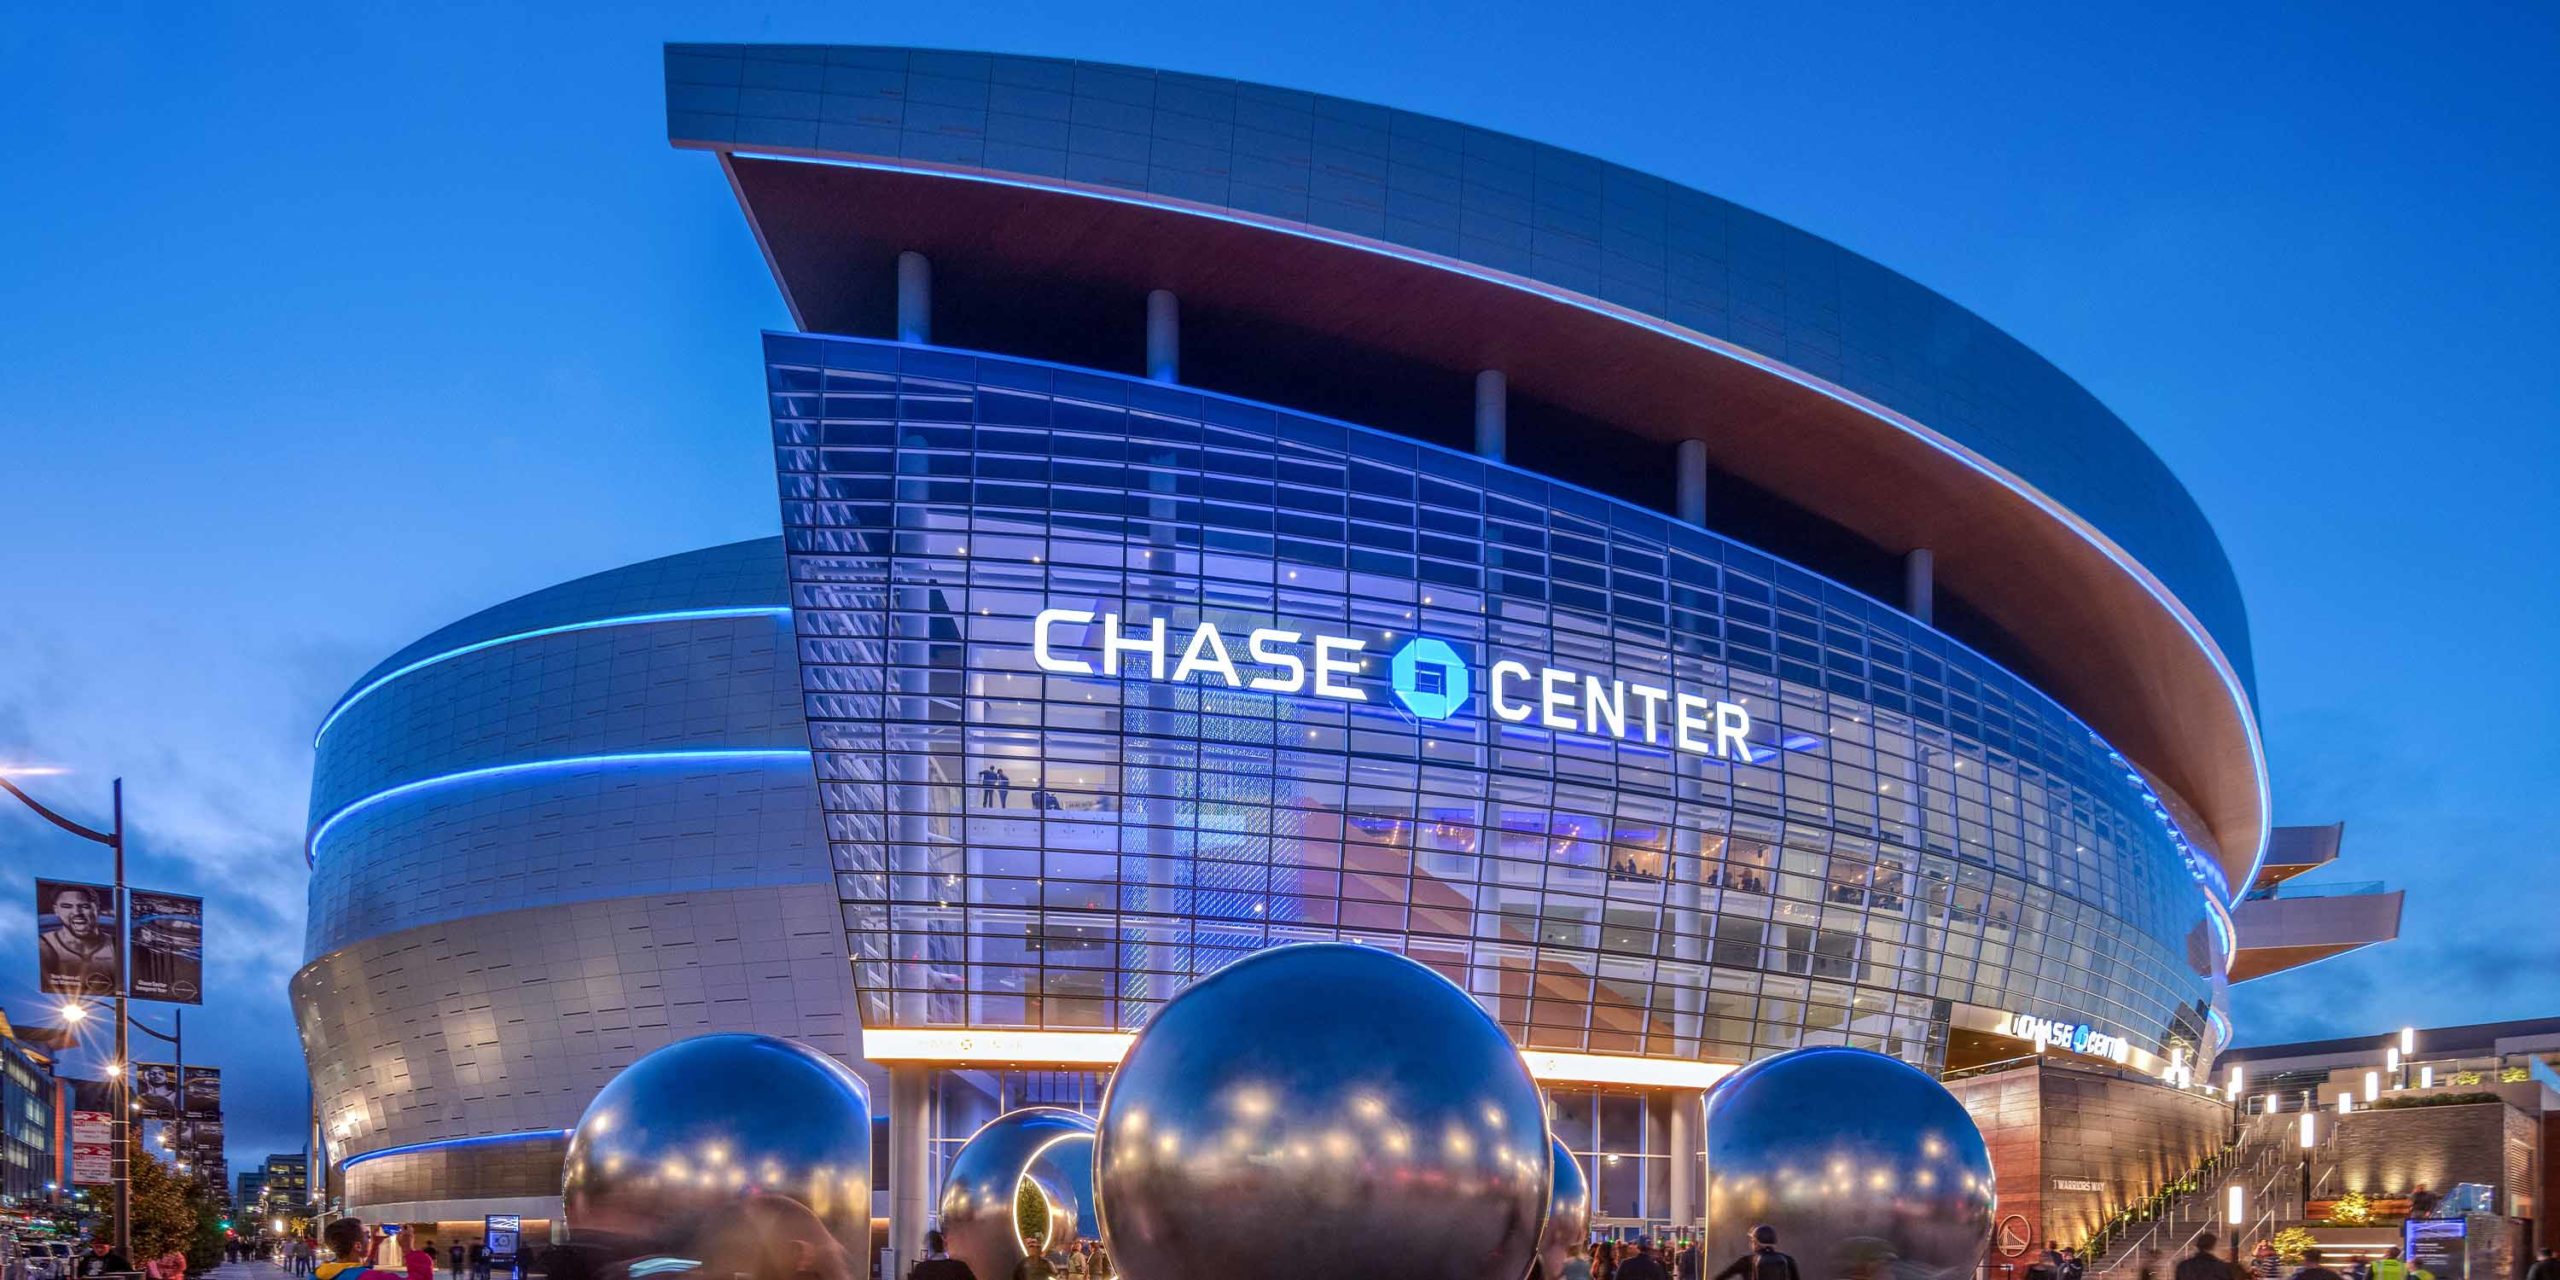 Chase Center Arena header image #4